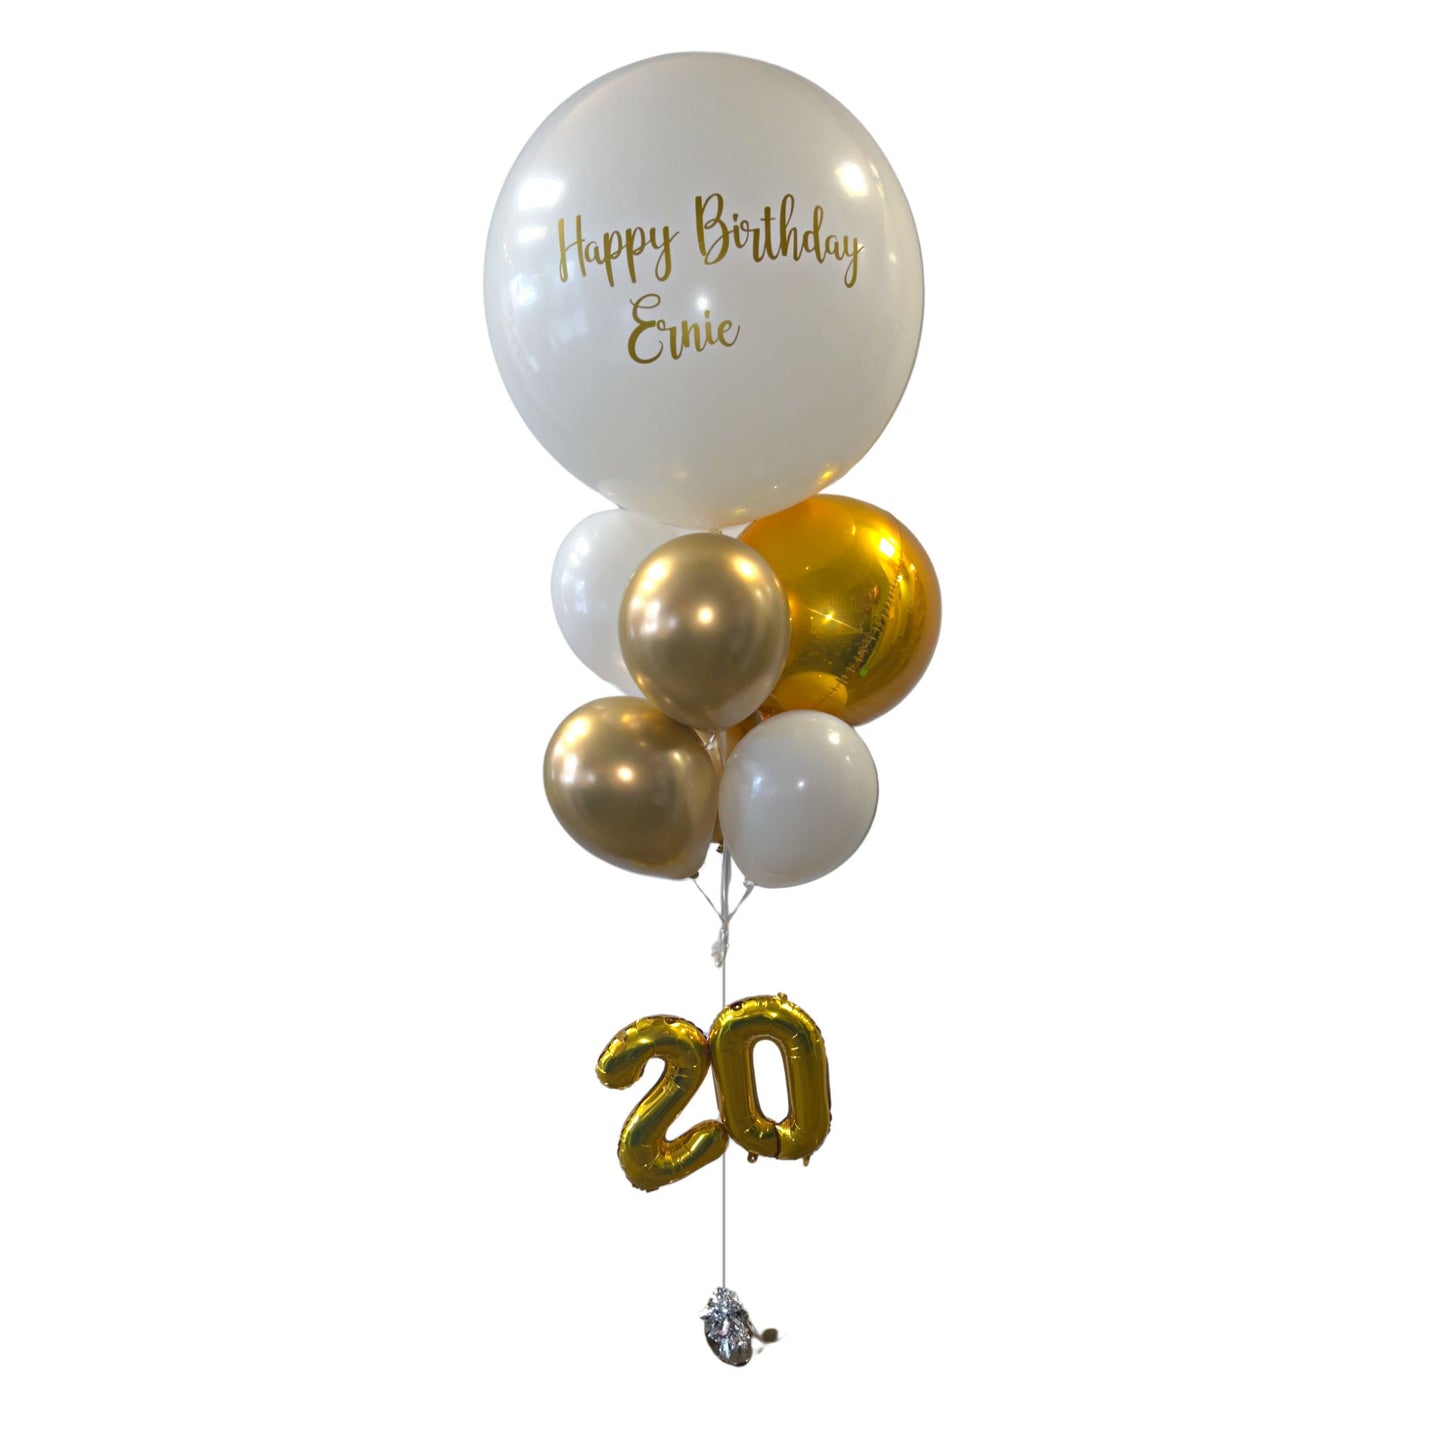 Chic Gold Script Birthday Balloon